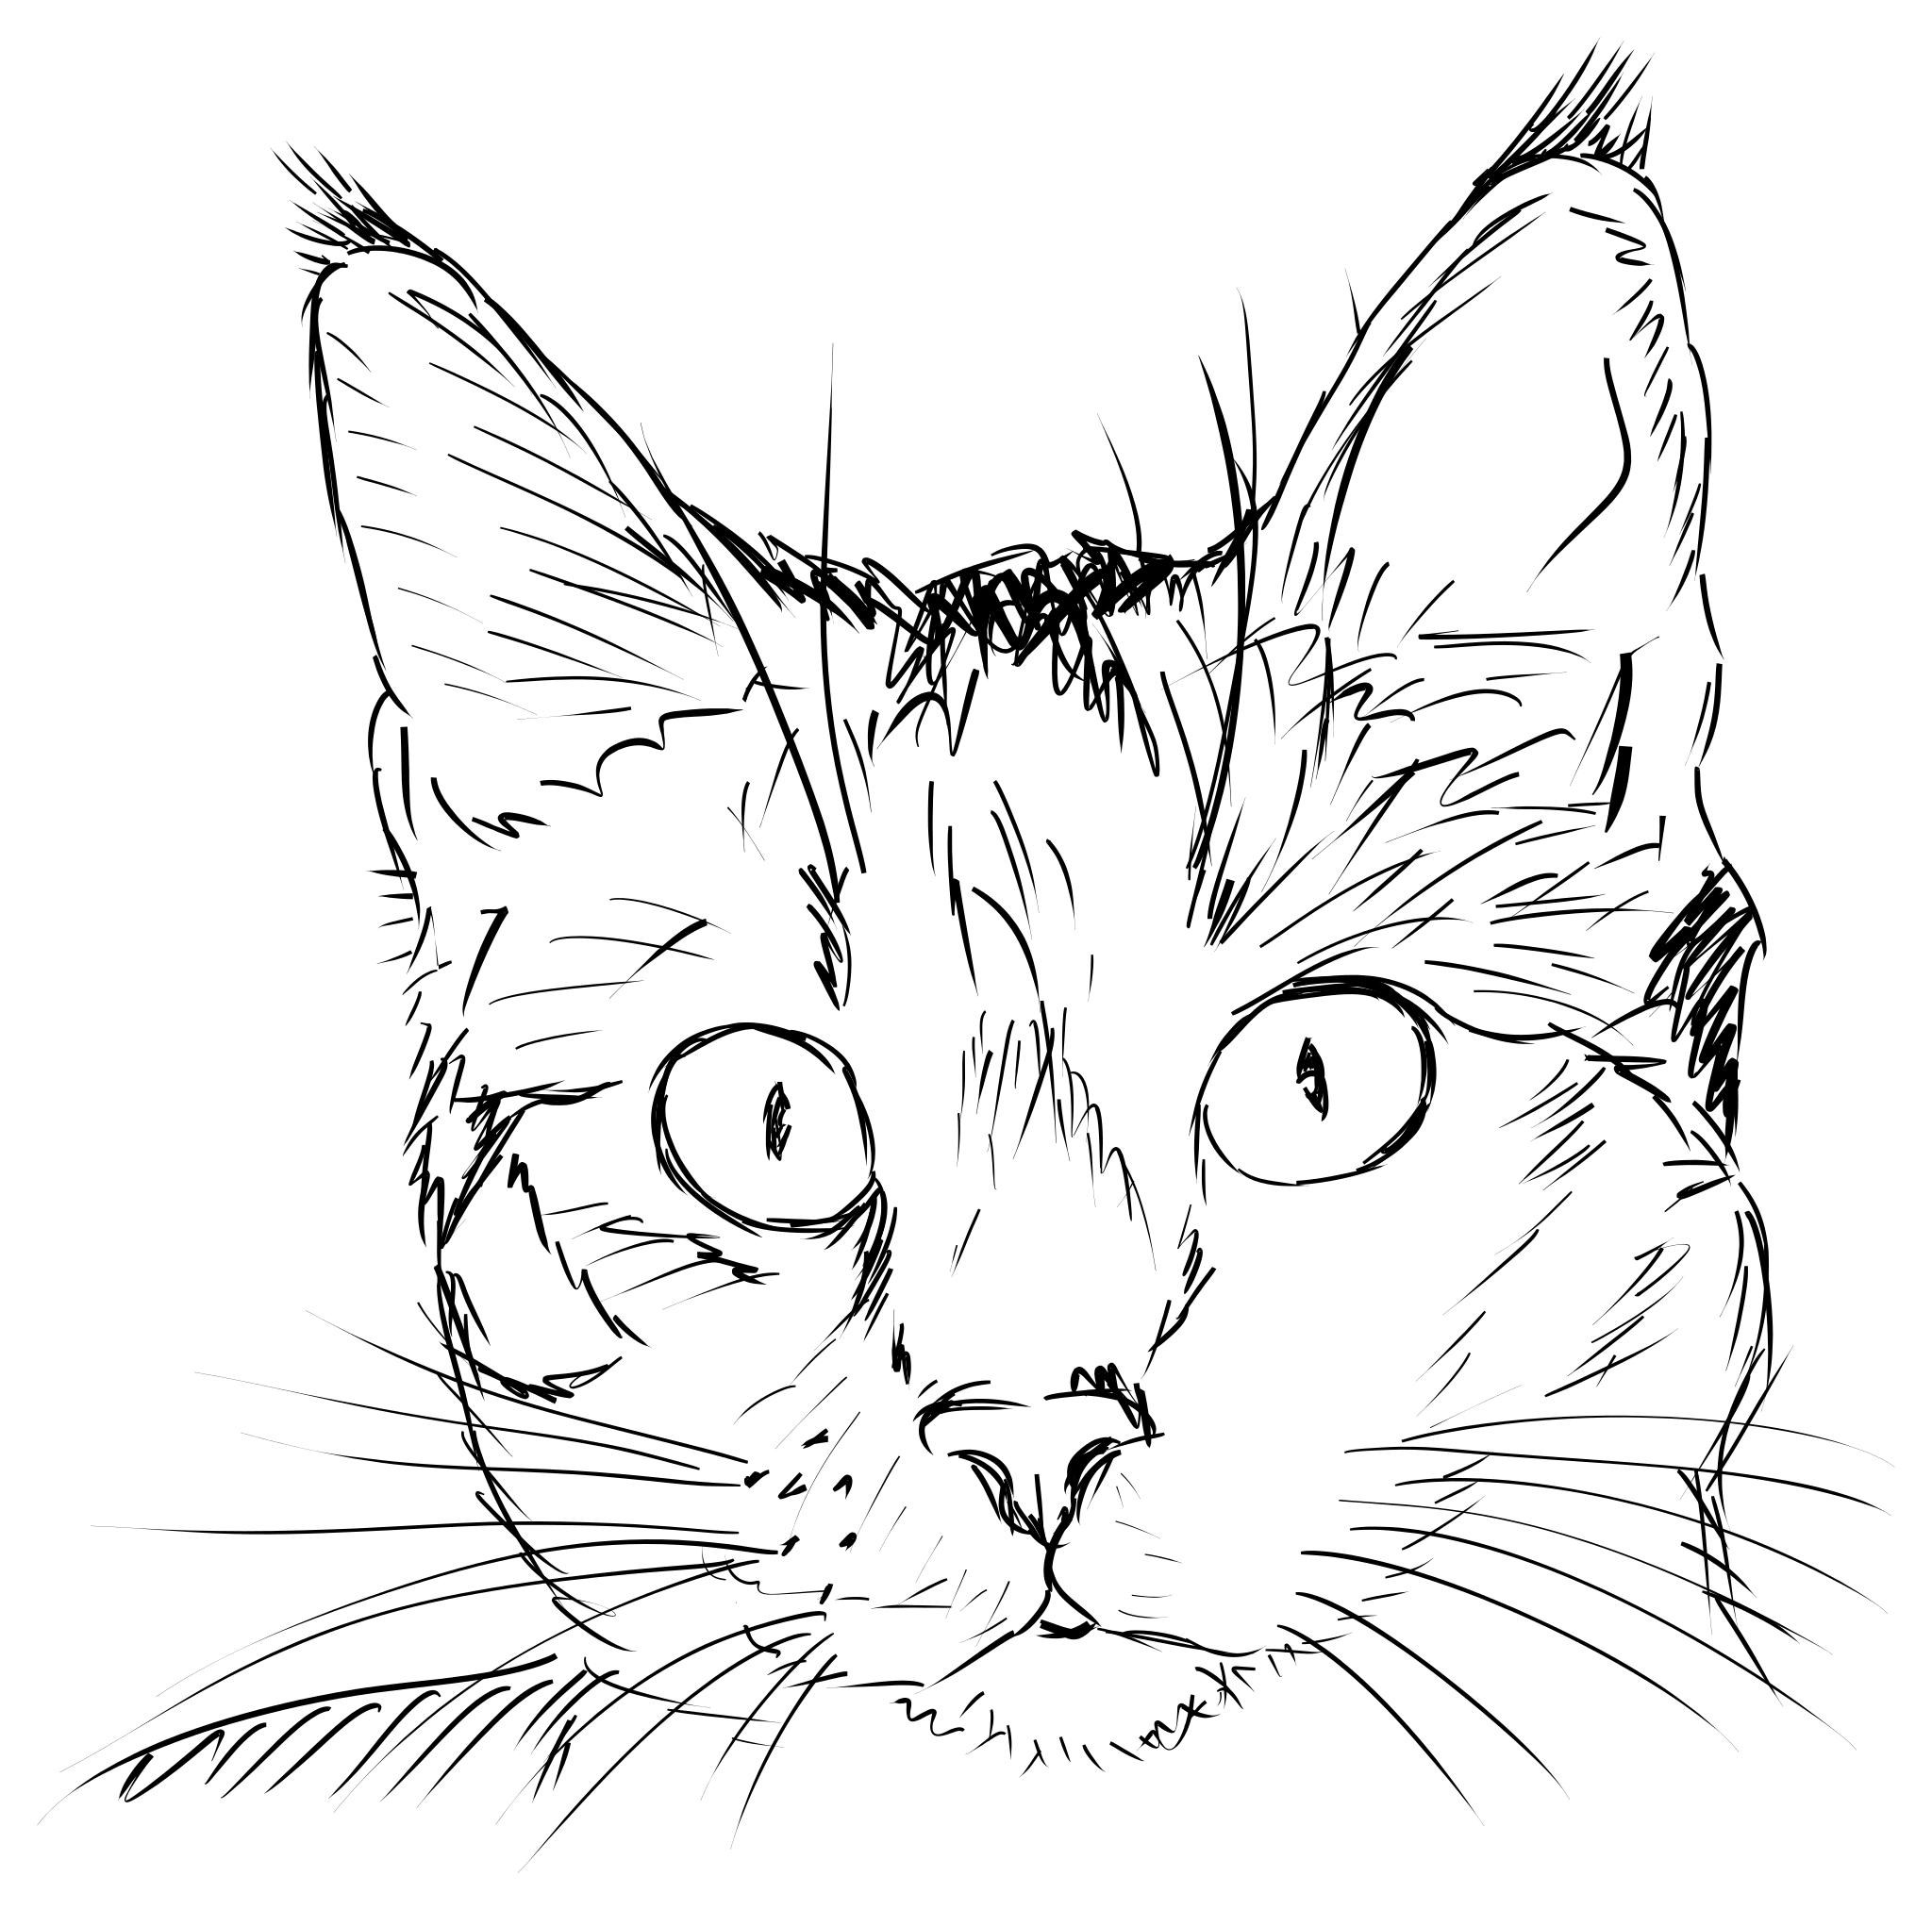 фото рисунка кота карандашом